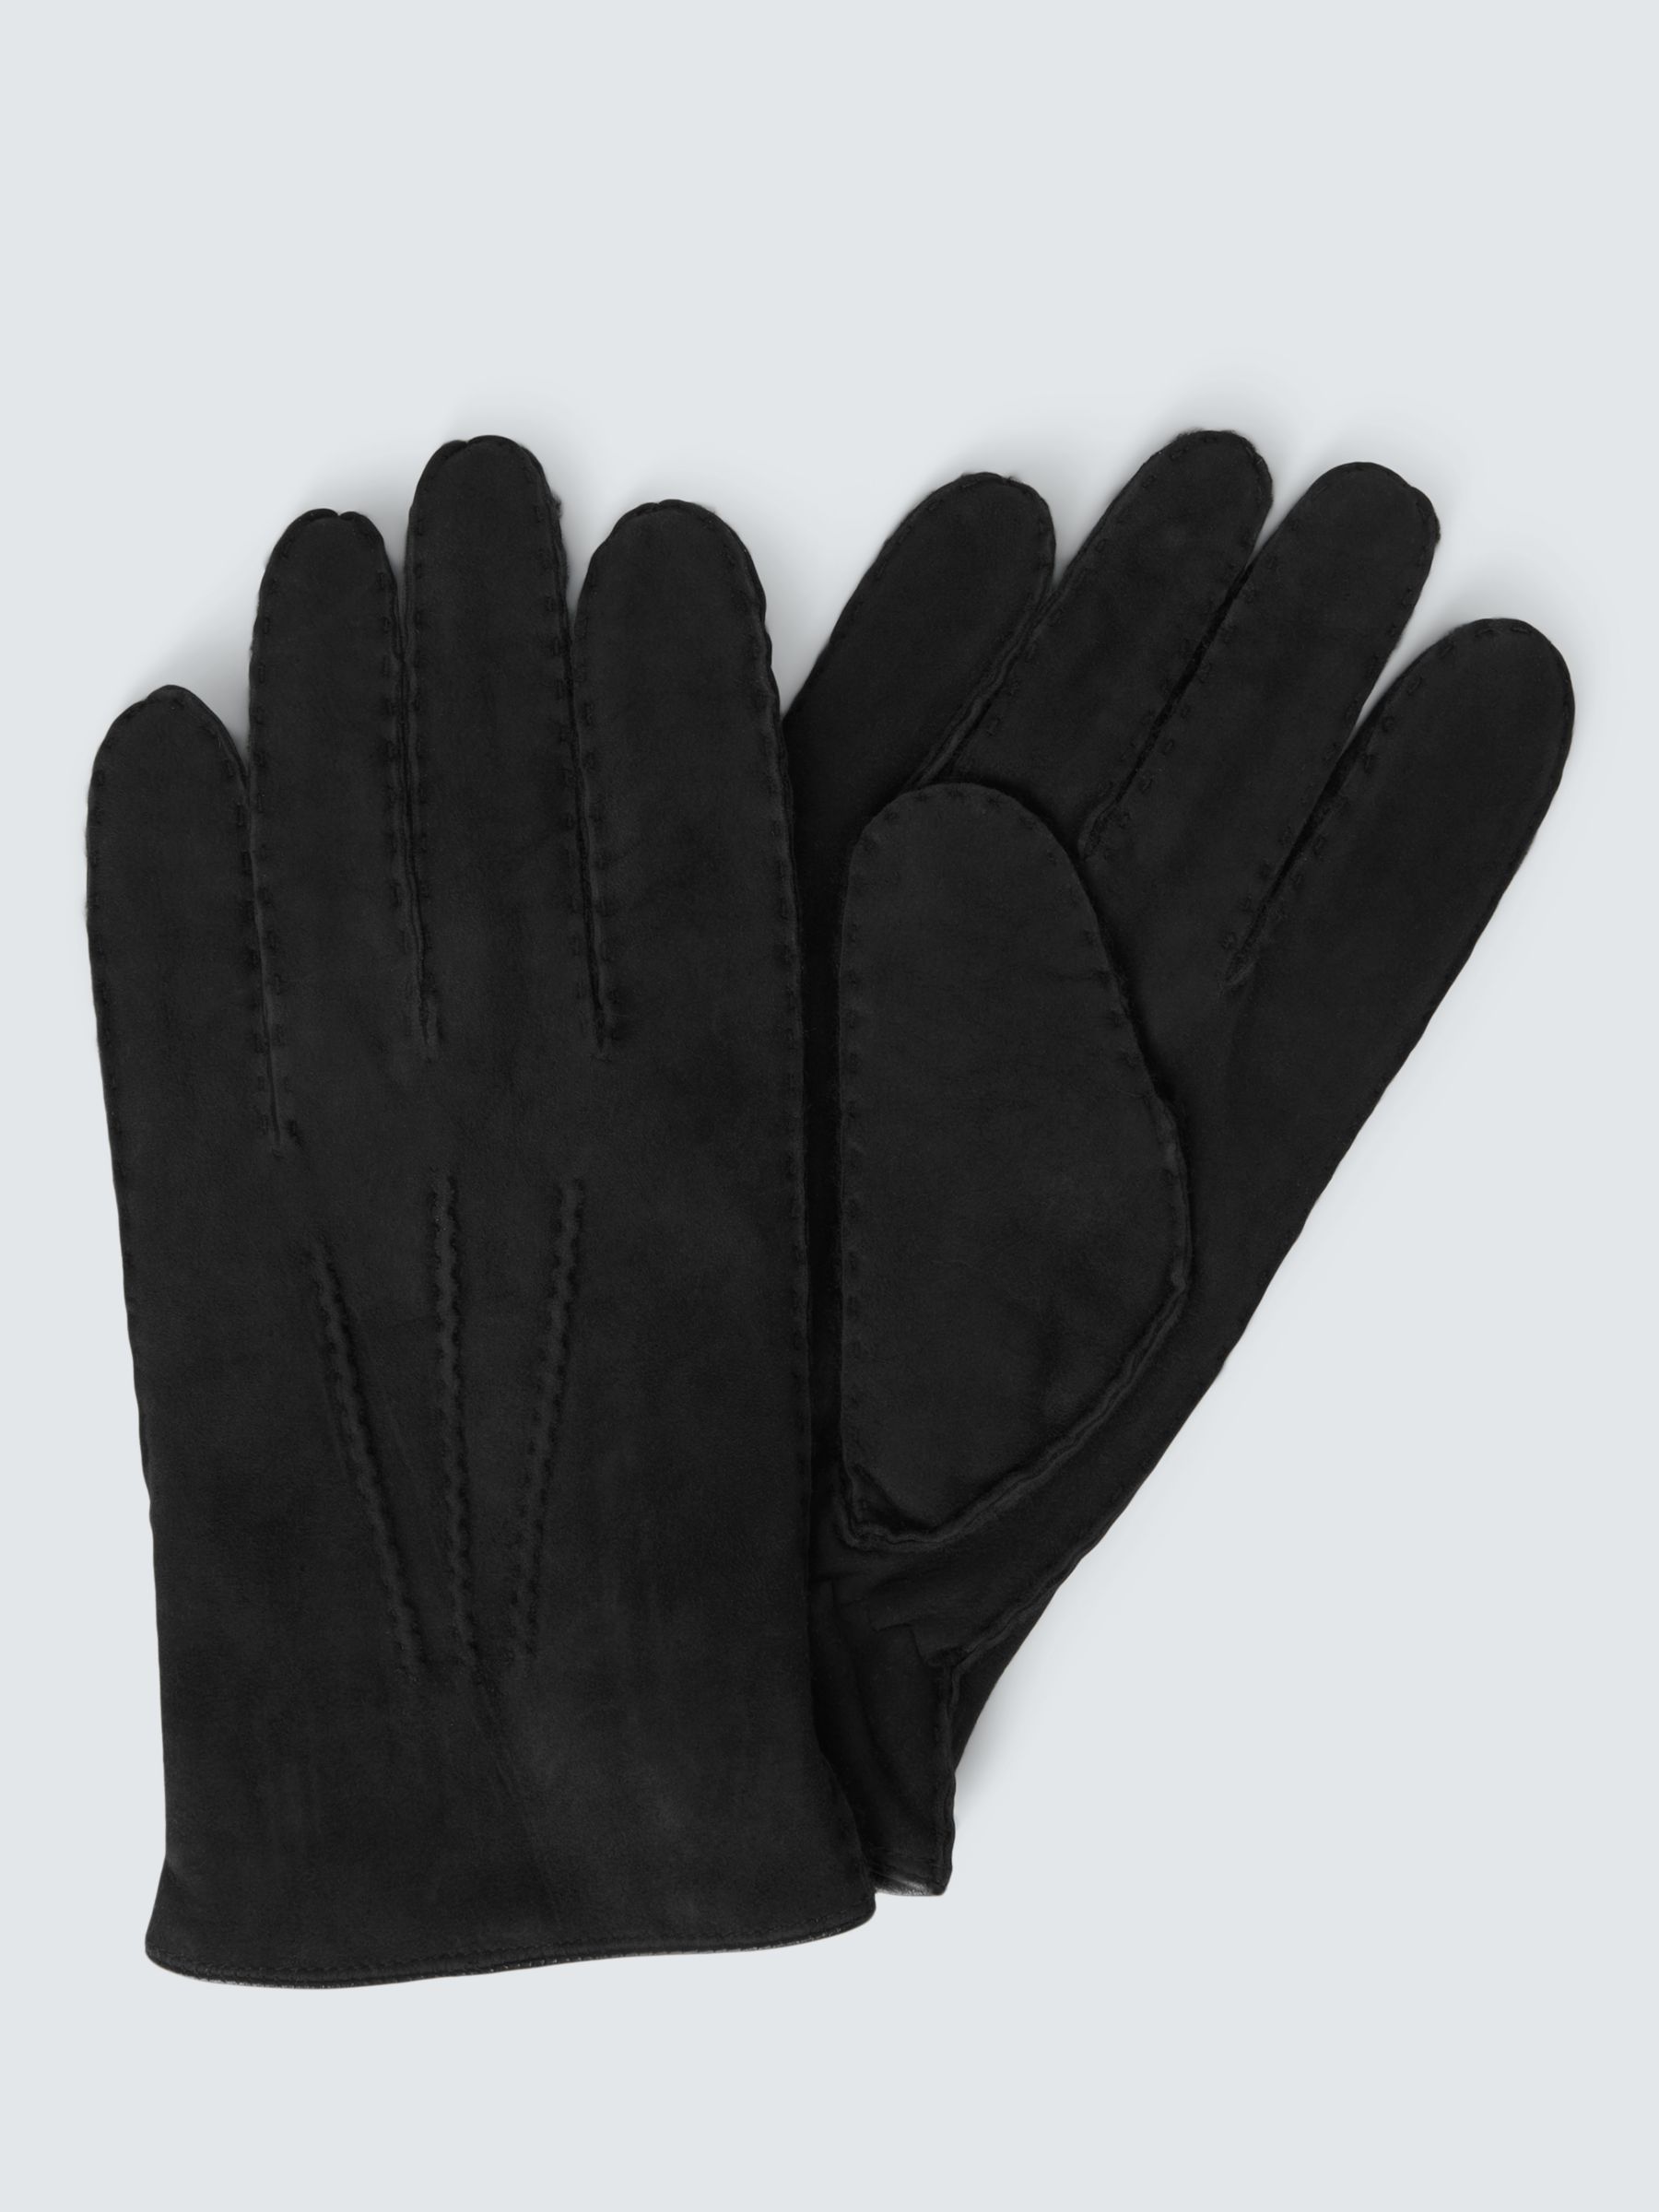 John Lewis Sheepskin Gloves, Black, S